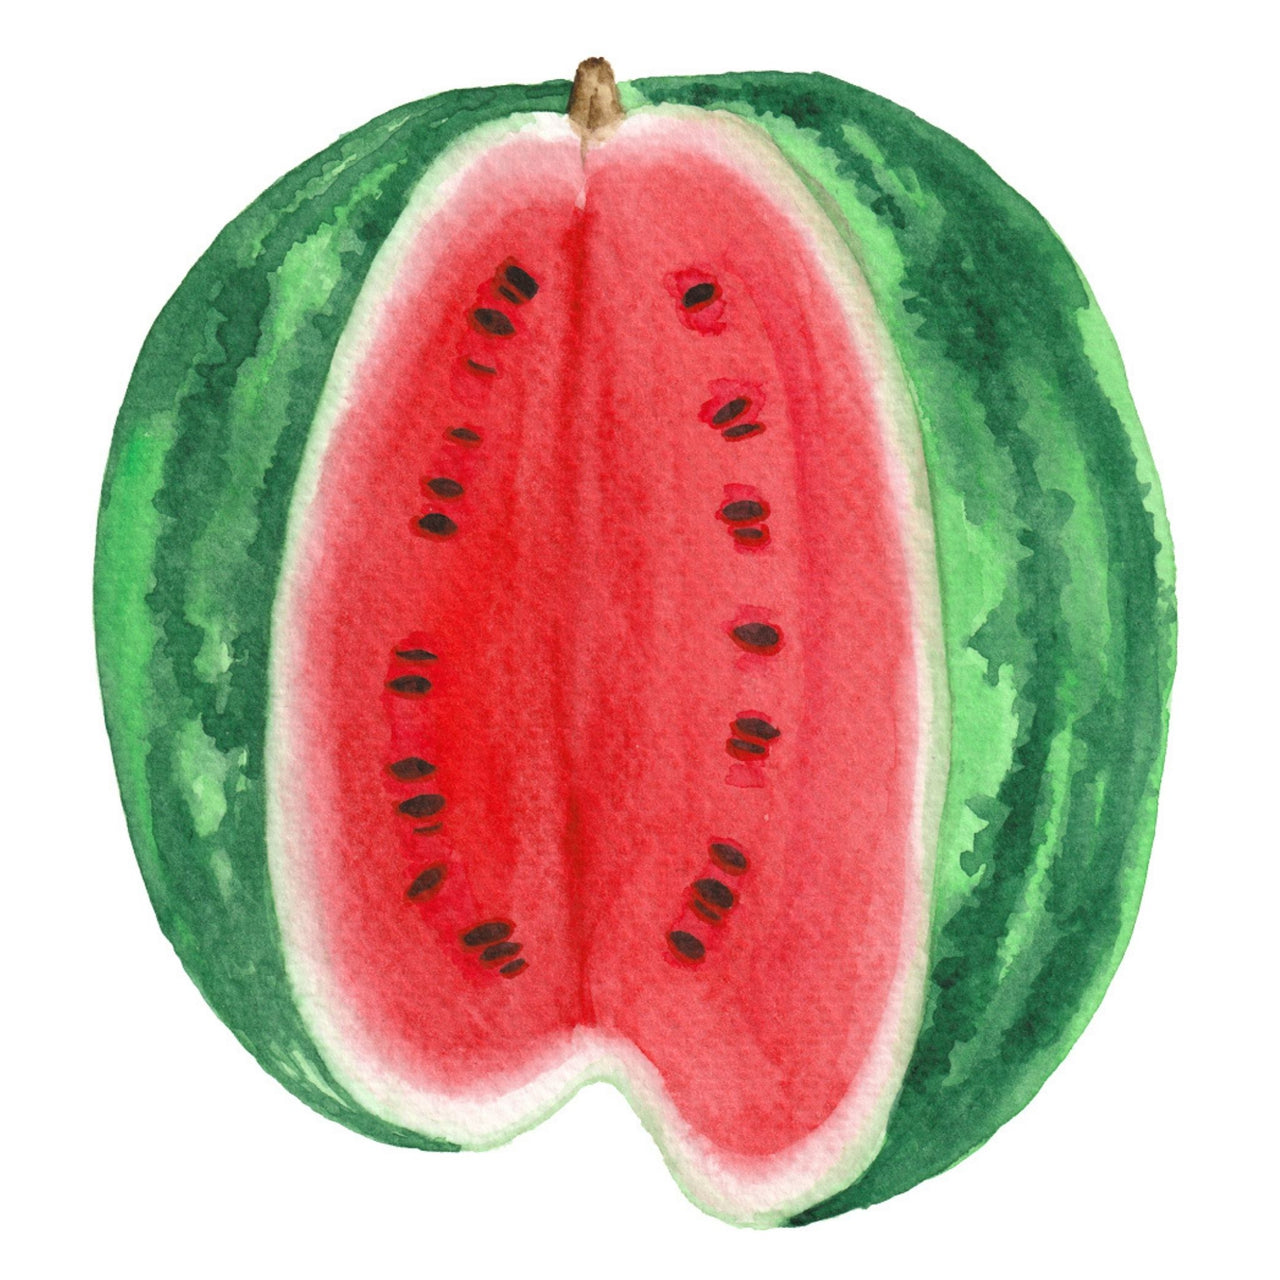 Watermelon seeds | Warpaint